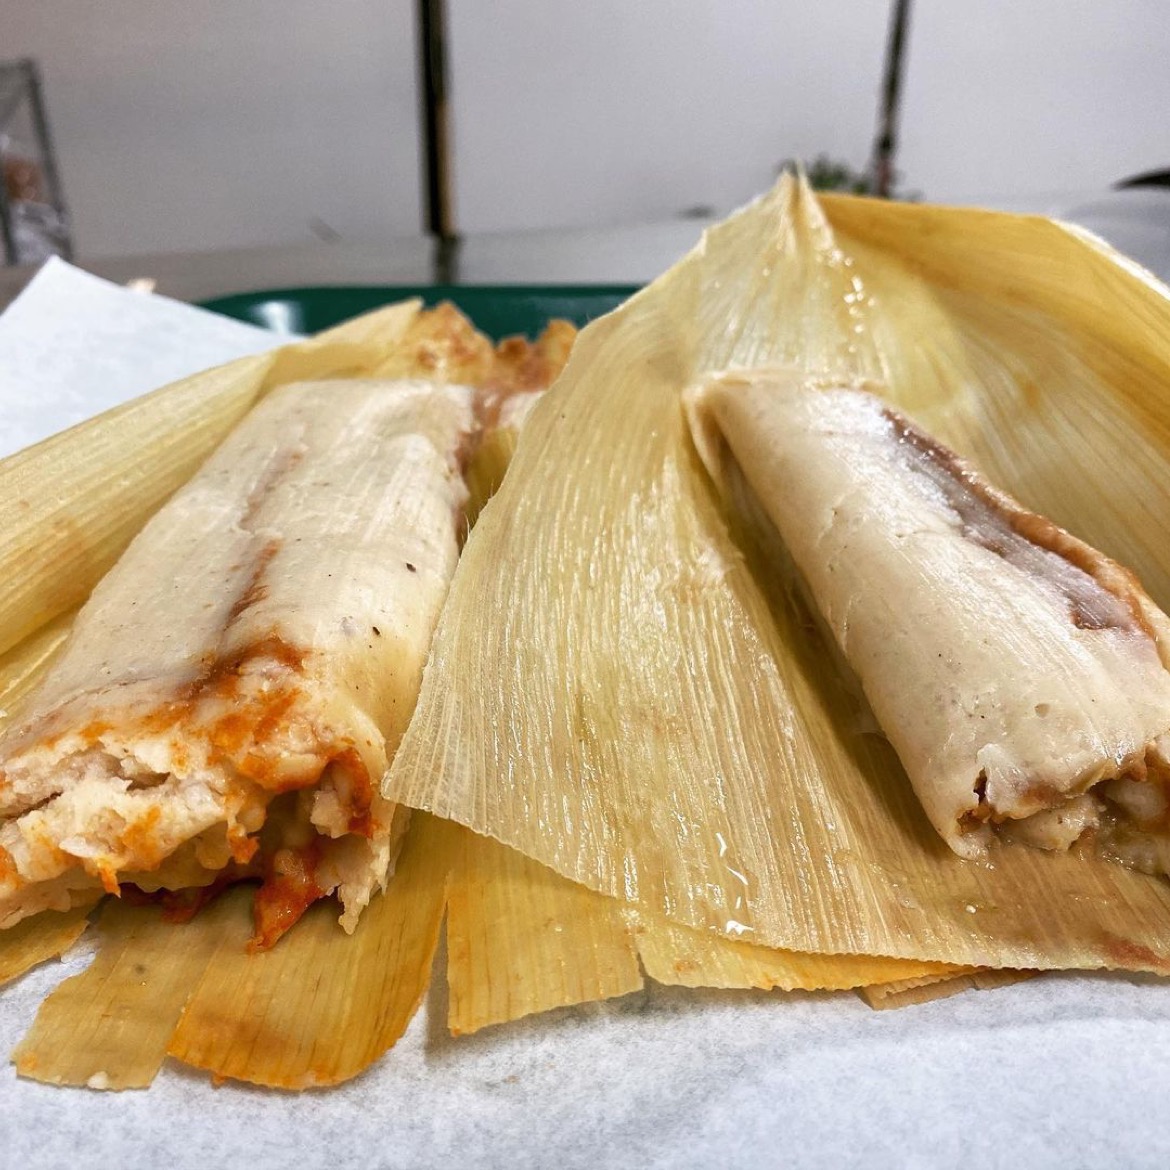 Vegan tamales from Toluca Bakery Cafe